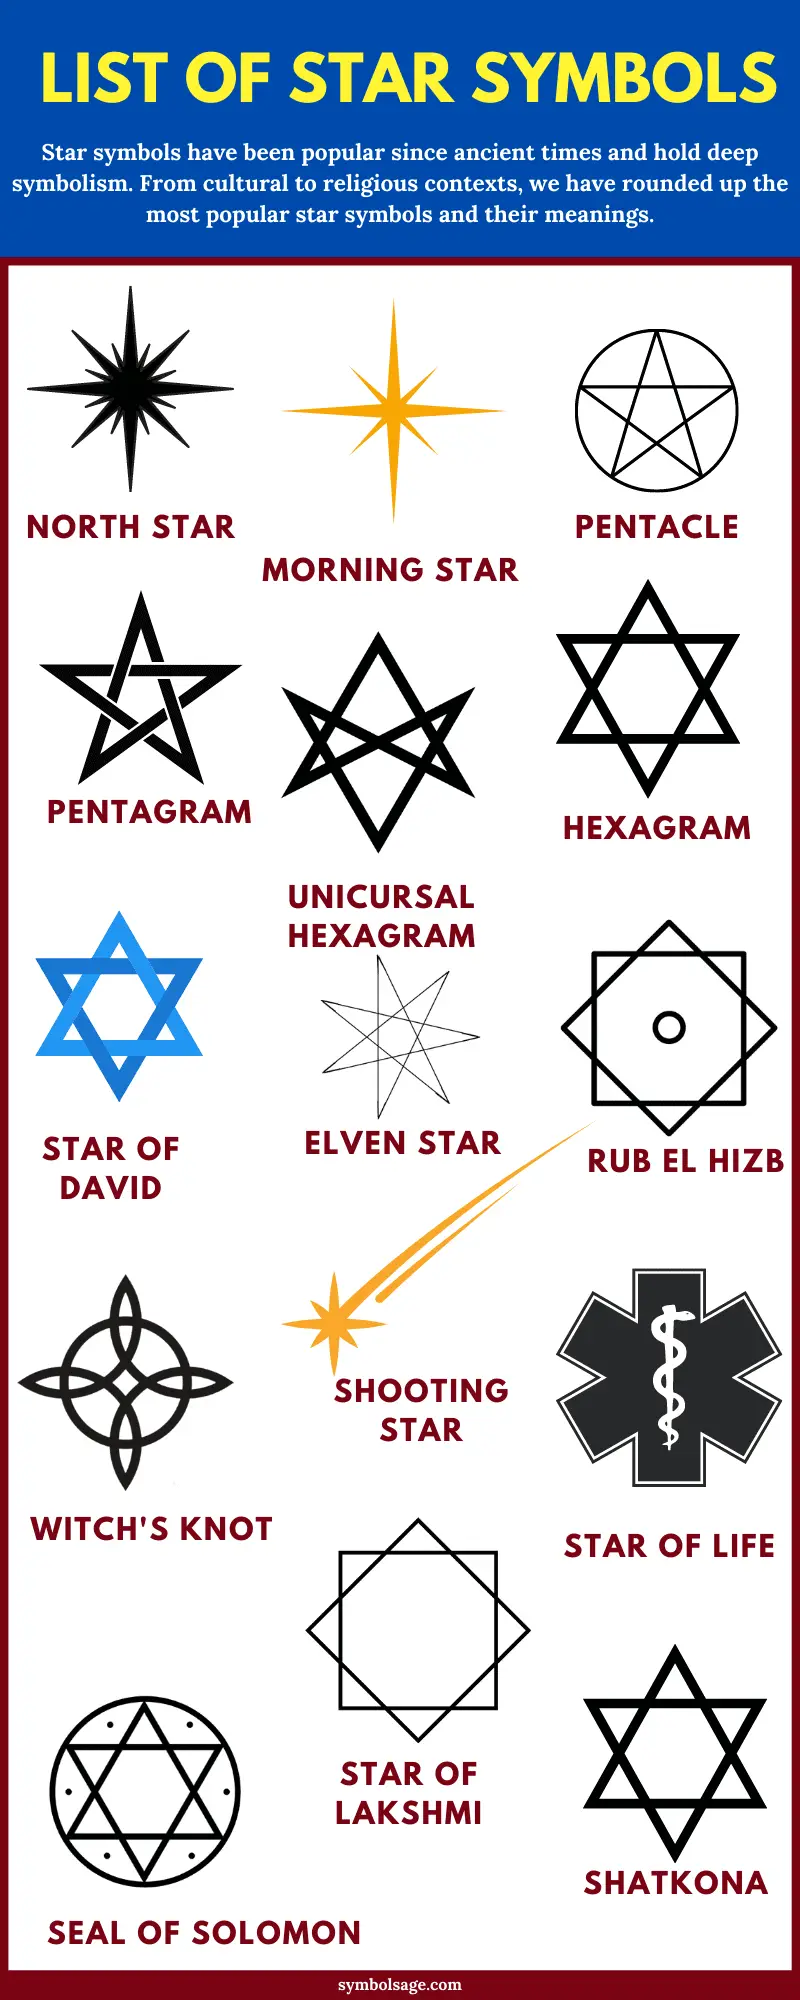 How The North Star Represents Faith